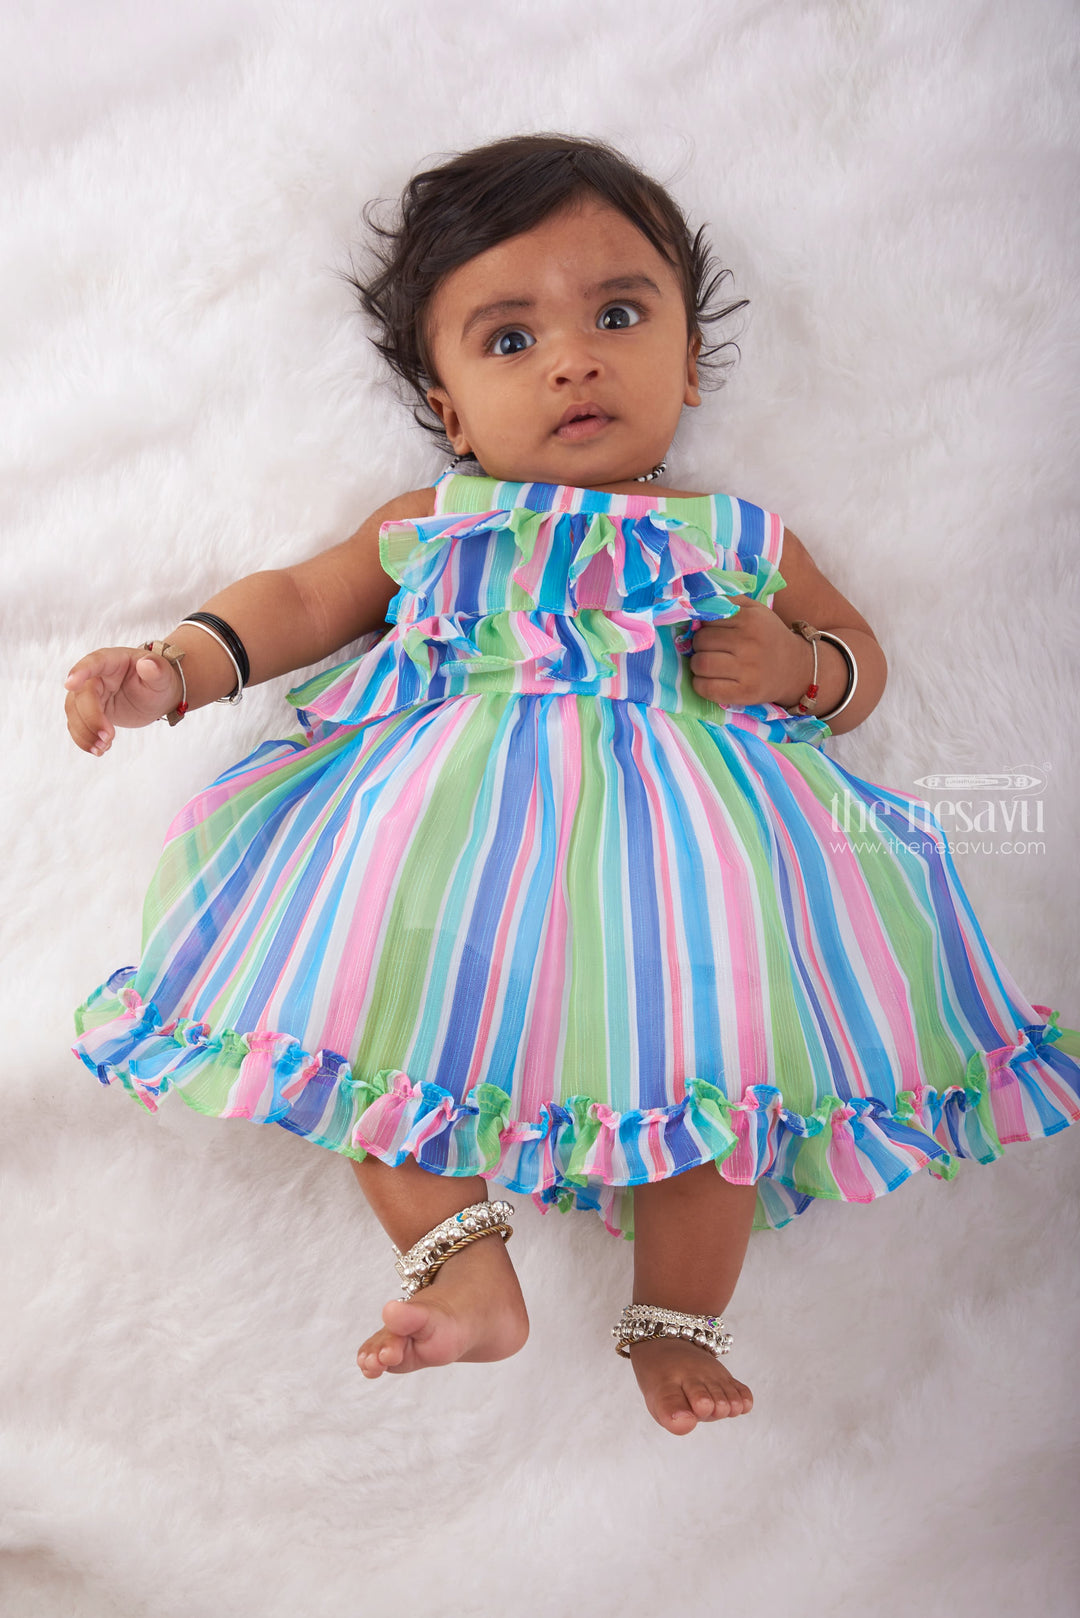 The Nesavu Baby Fancy Frock Striped Baby Dress with Ruffled Neckline- Rainbow Ruffle Radiance Baby Dress Nesavu 14 (6M) / Green / Poly Georgette BFJ479A-14 Sweet Styles for Sweet Moments | Bestselling Baby Frocks | The Nesavu